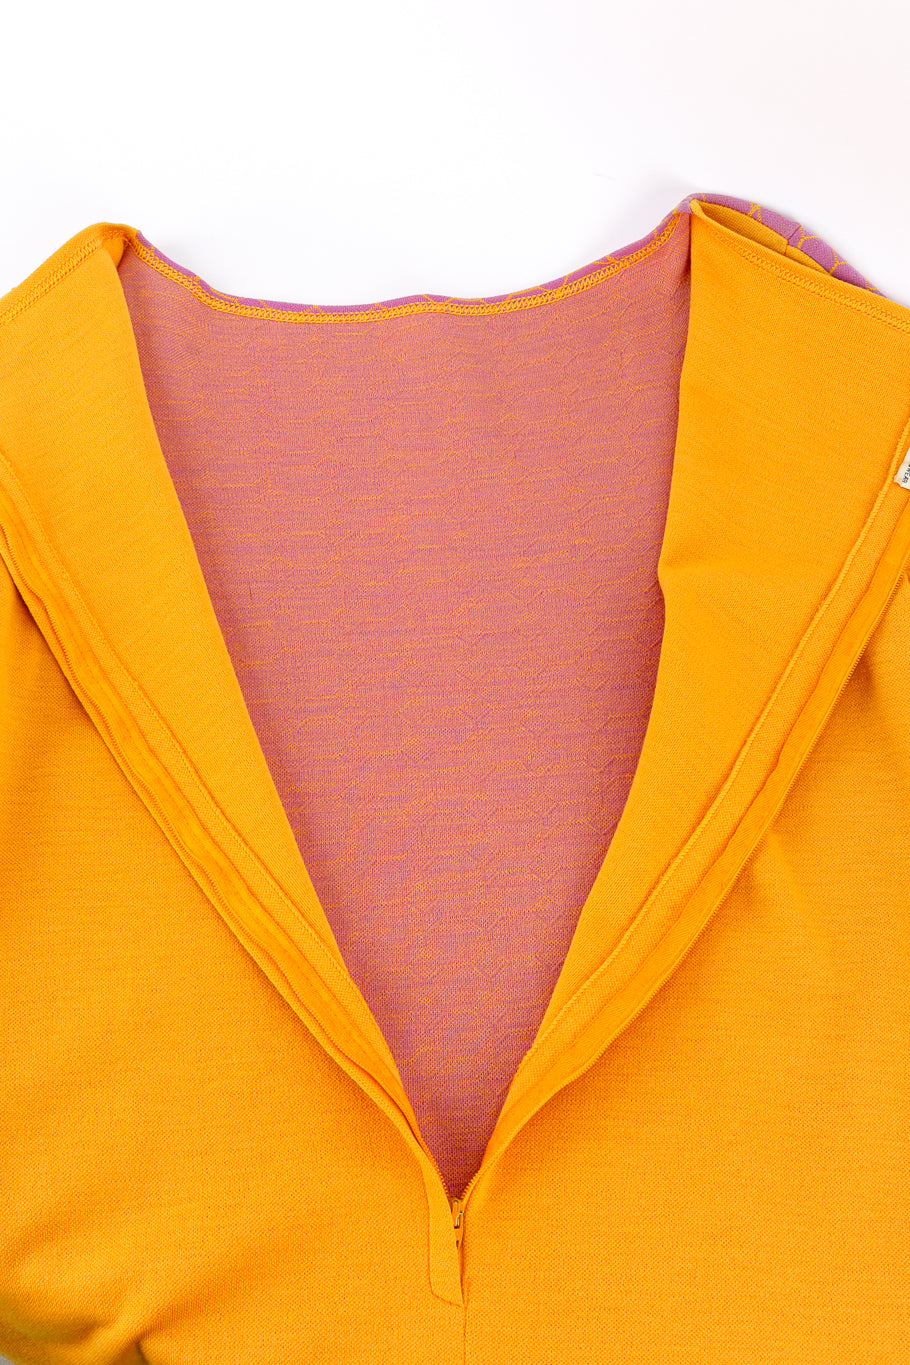 Vintage Rudi Gernreich Honeycomb Print Knit Dress back unzipped @recess la